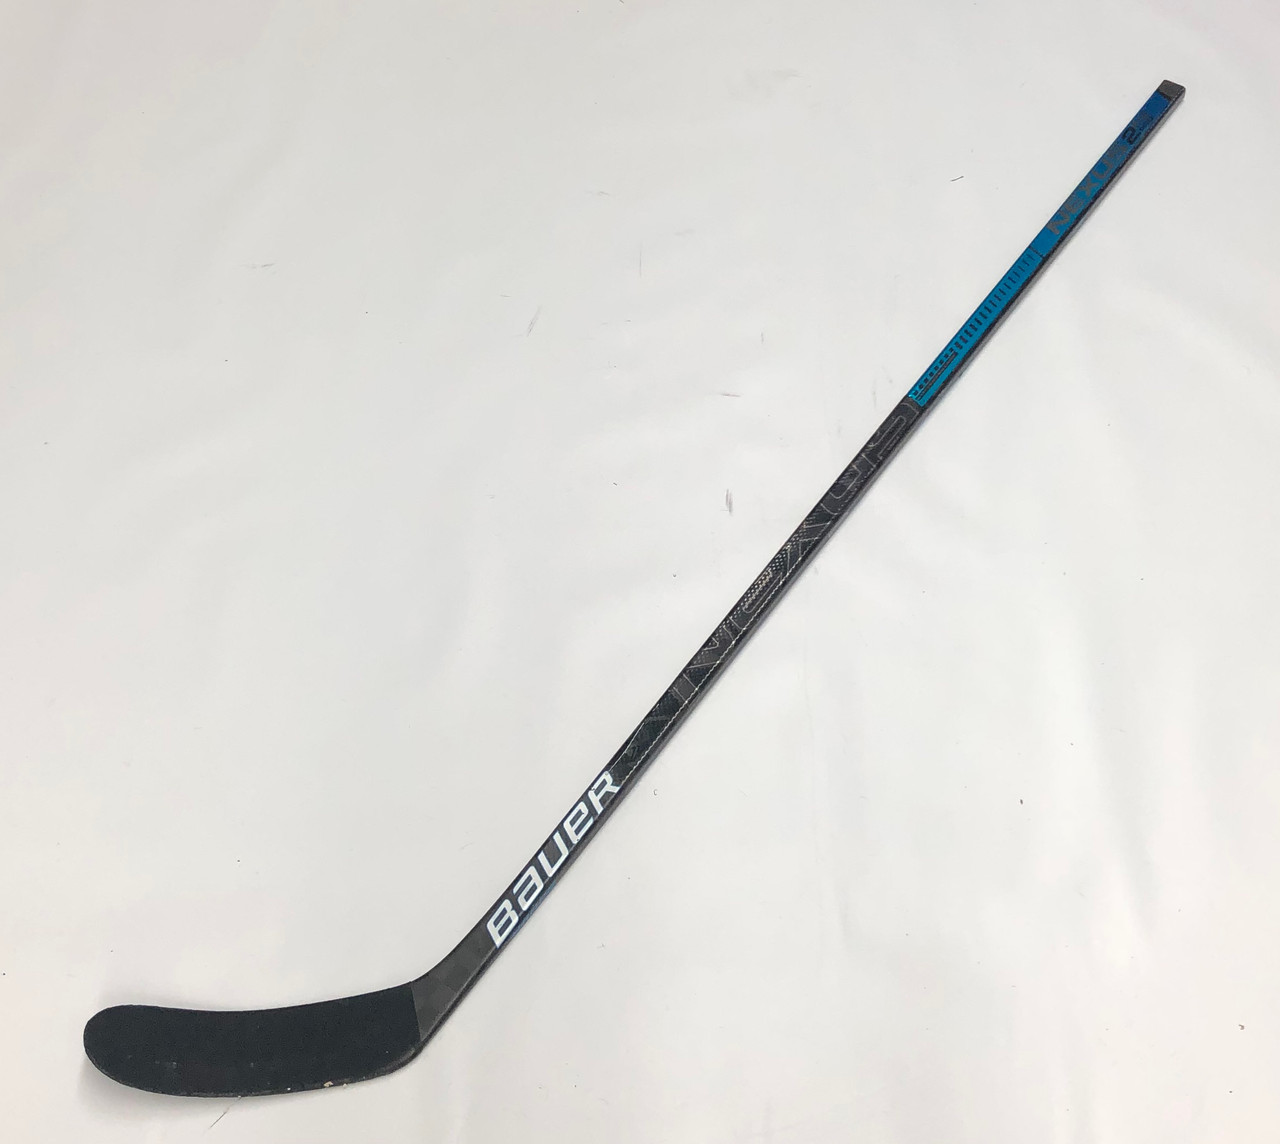 Refurb* Bauer Nexus 2N Pro RH Pro Stock Stick Grip Used P28 70 Flex HAN -  DK's Hockey Shop